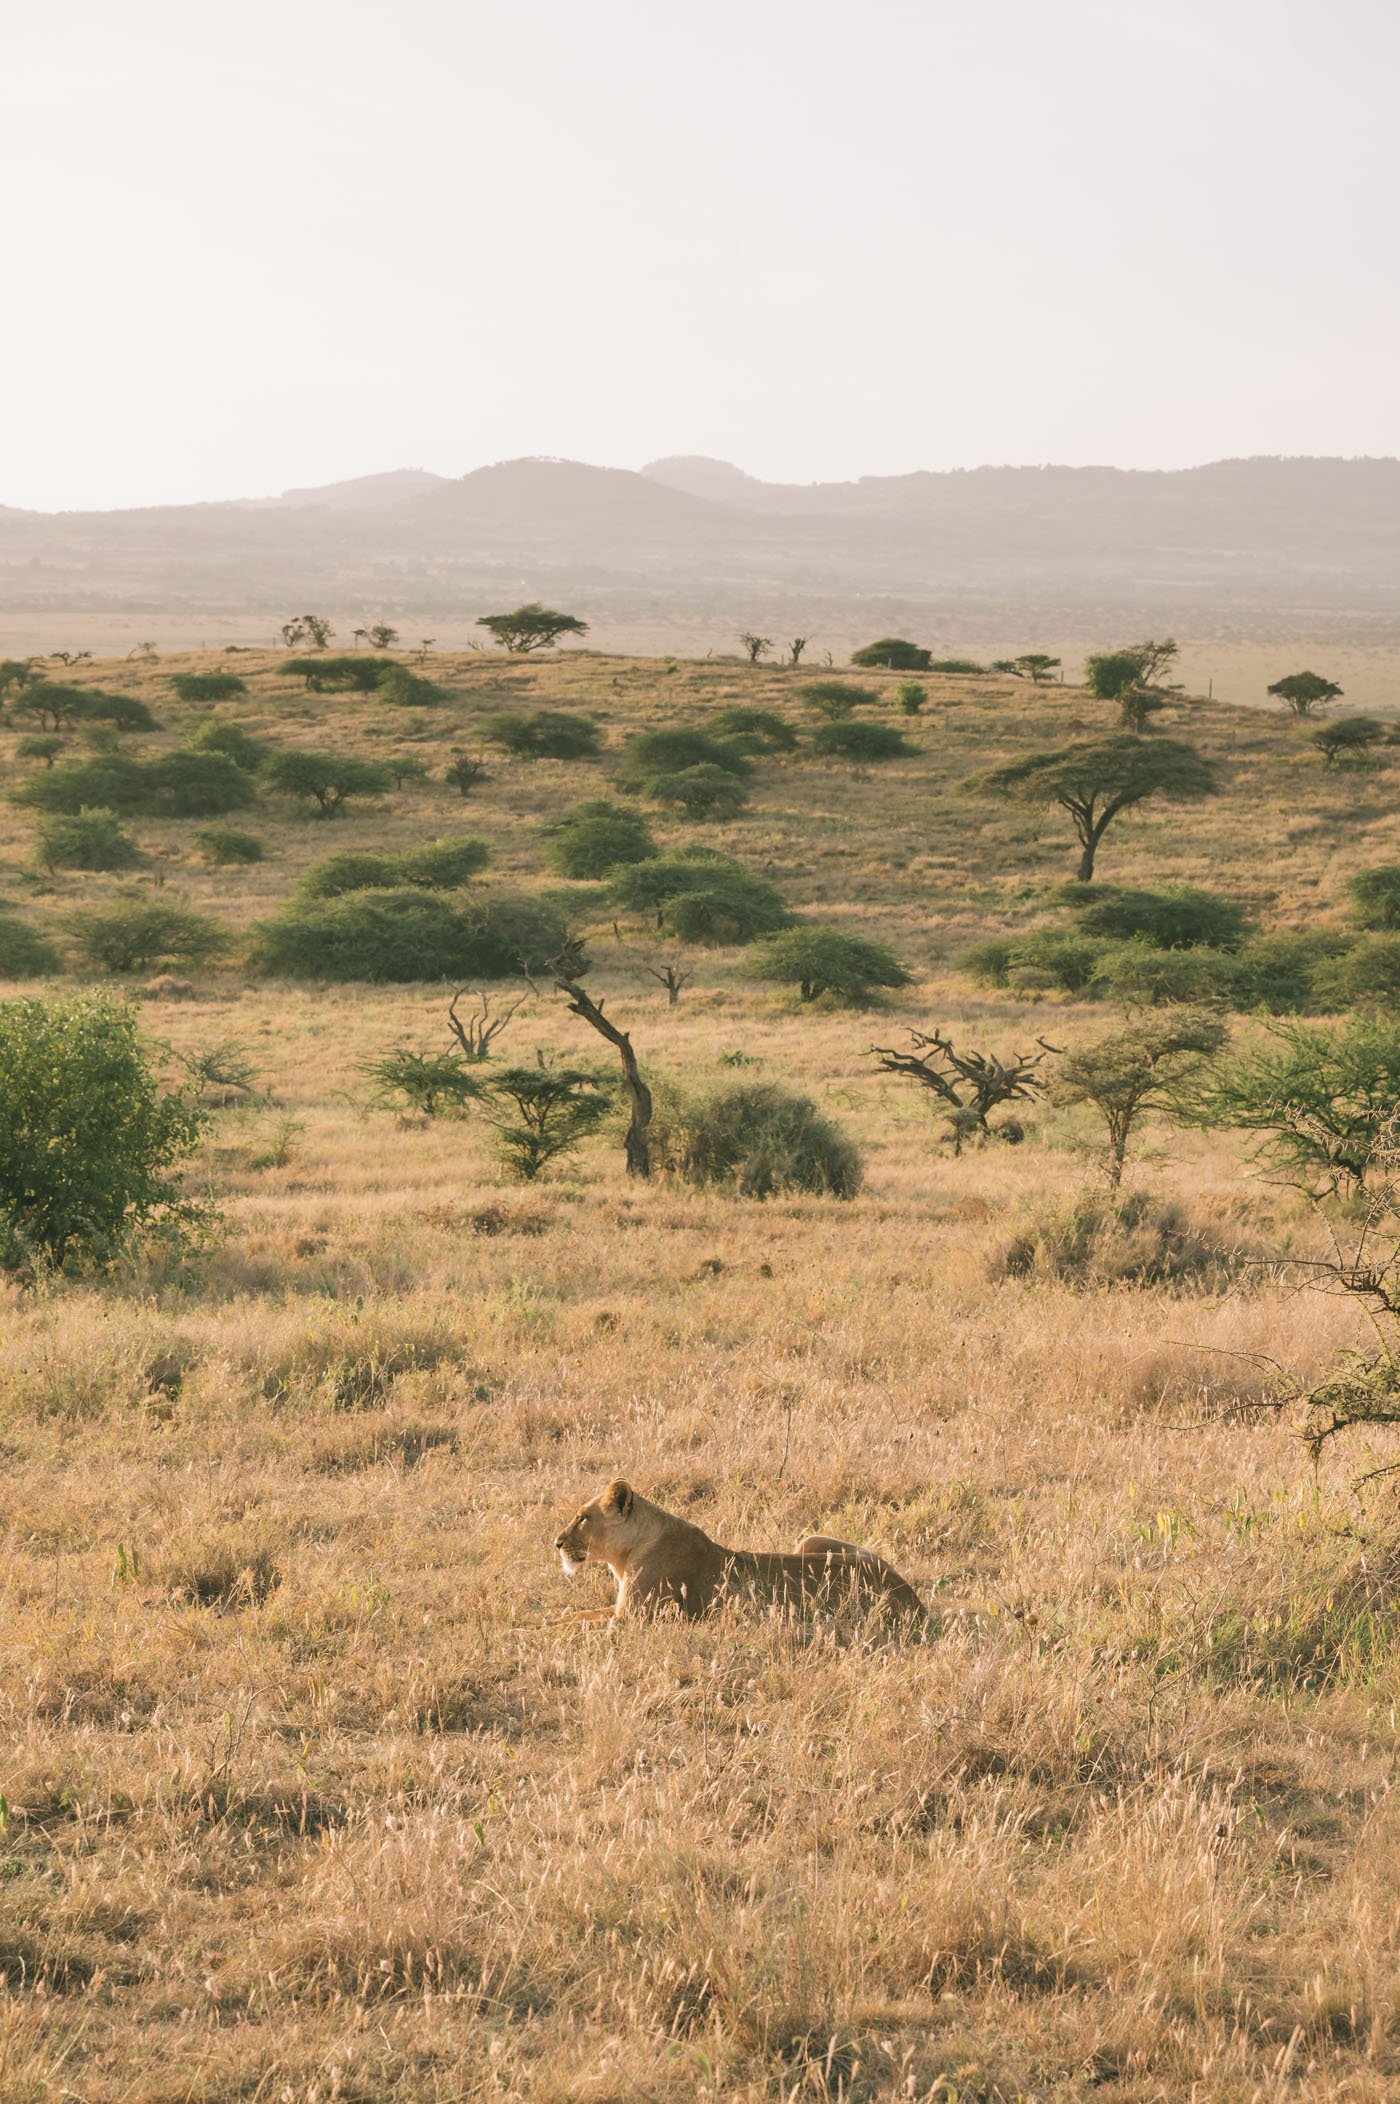 Lioness at Lewa Conservancy Kenya